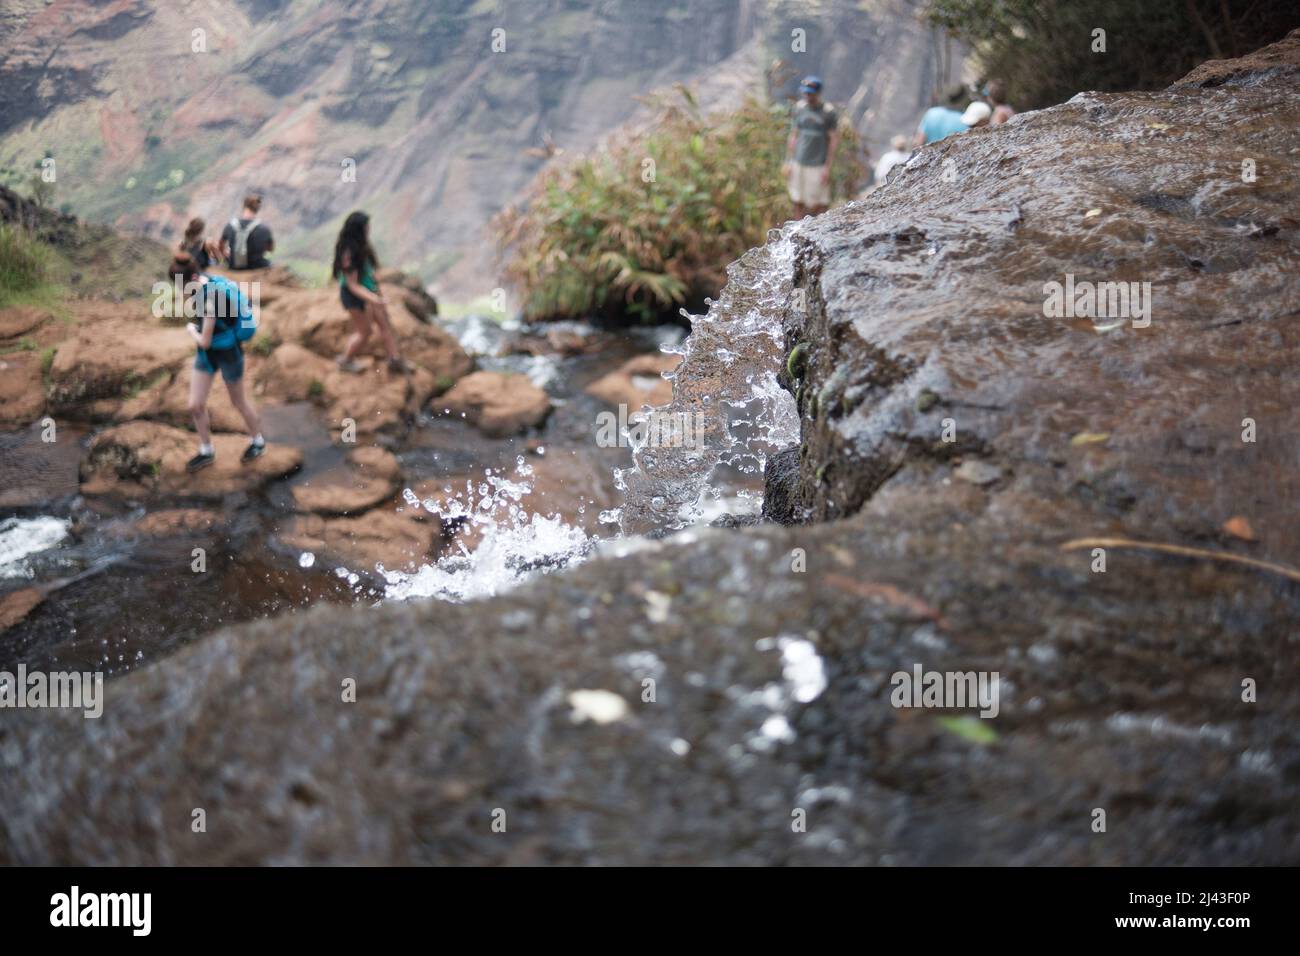 Kids playing below a splashing waterfall Stock Photo